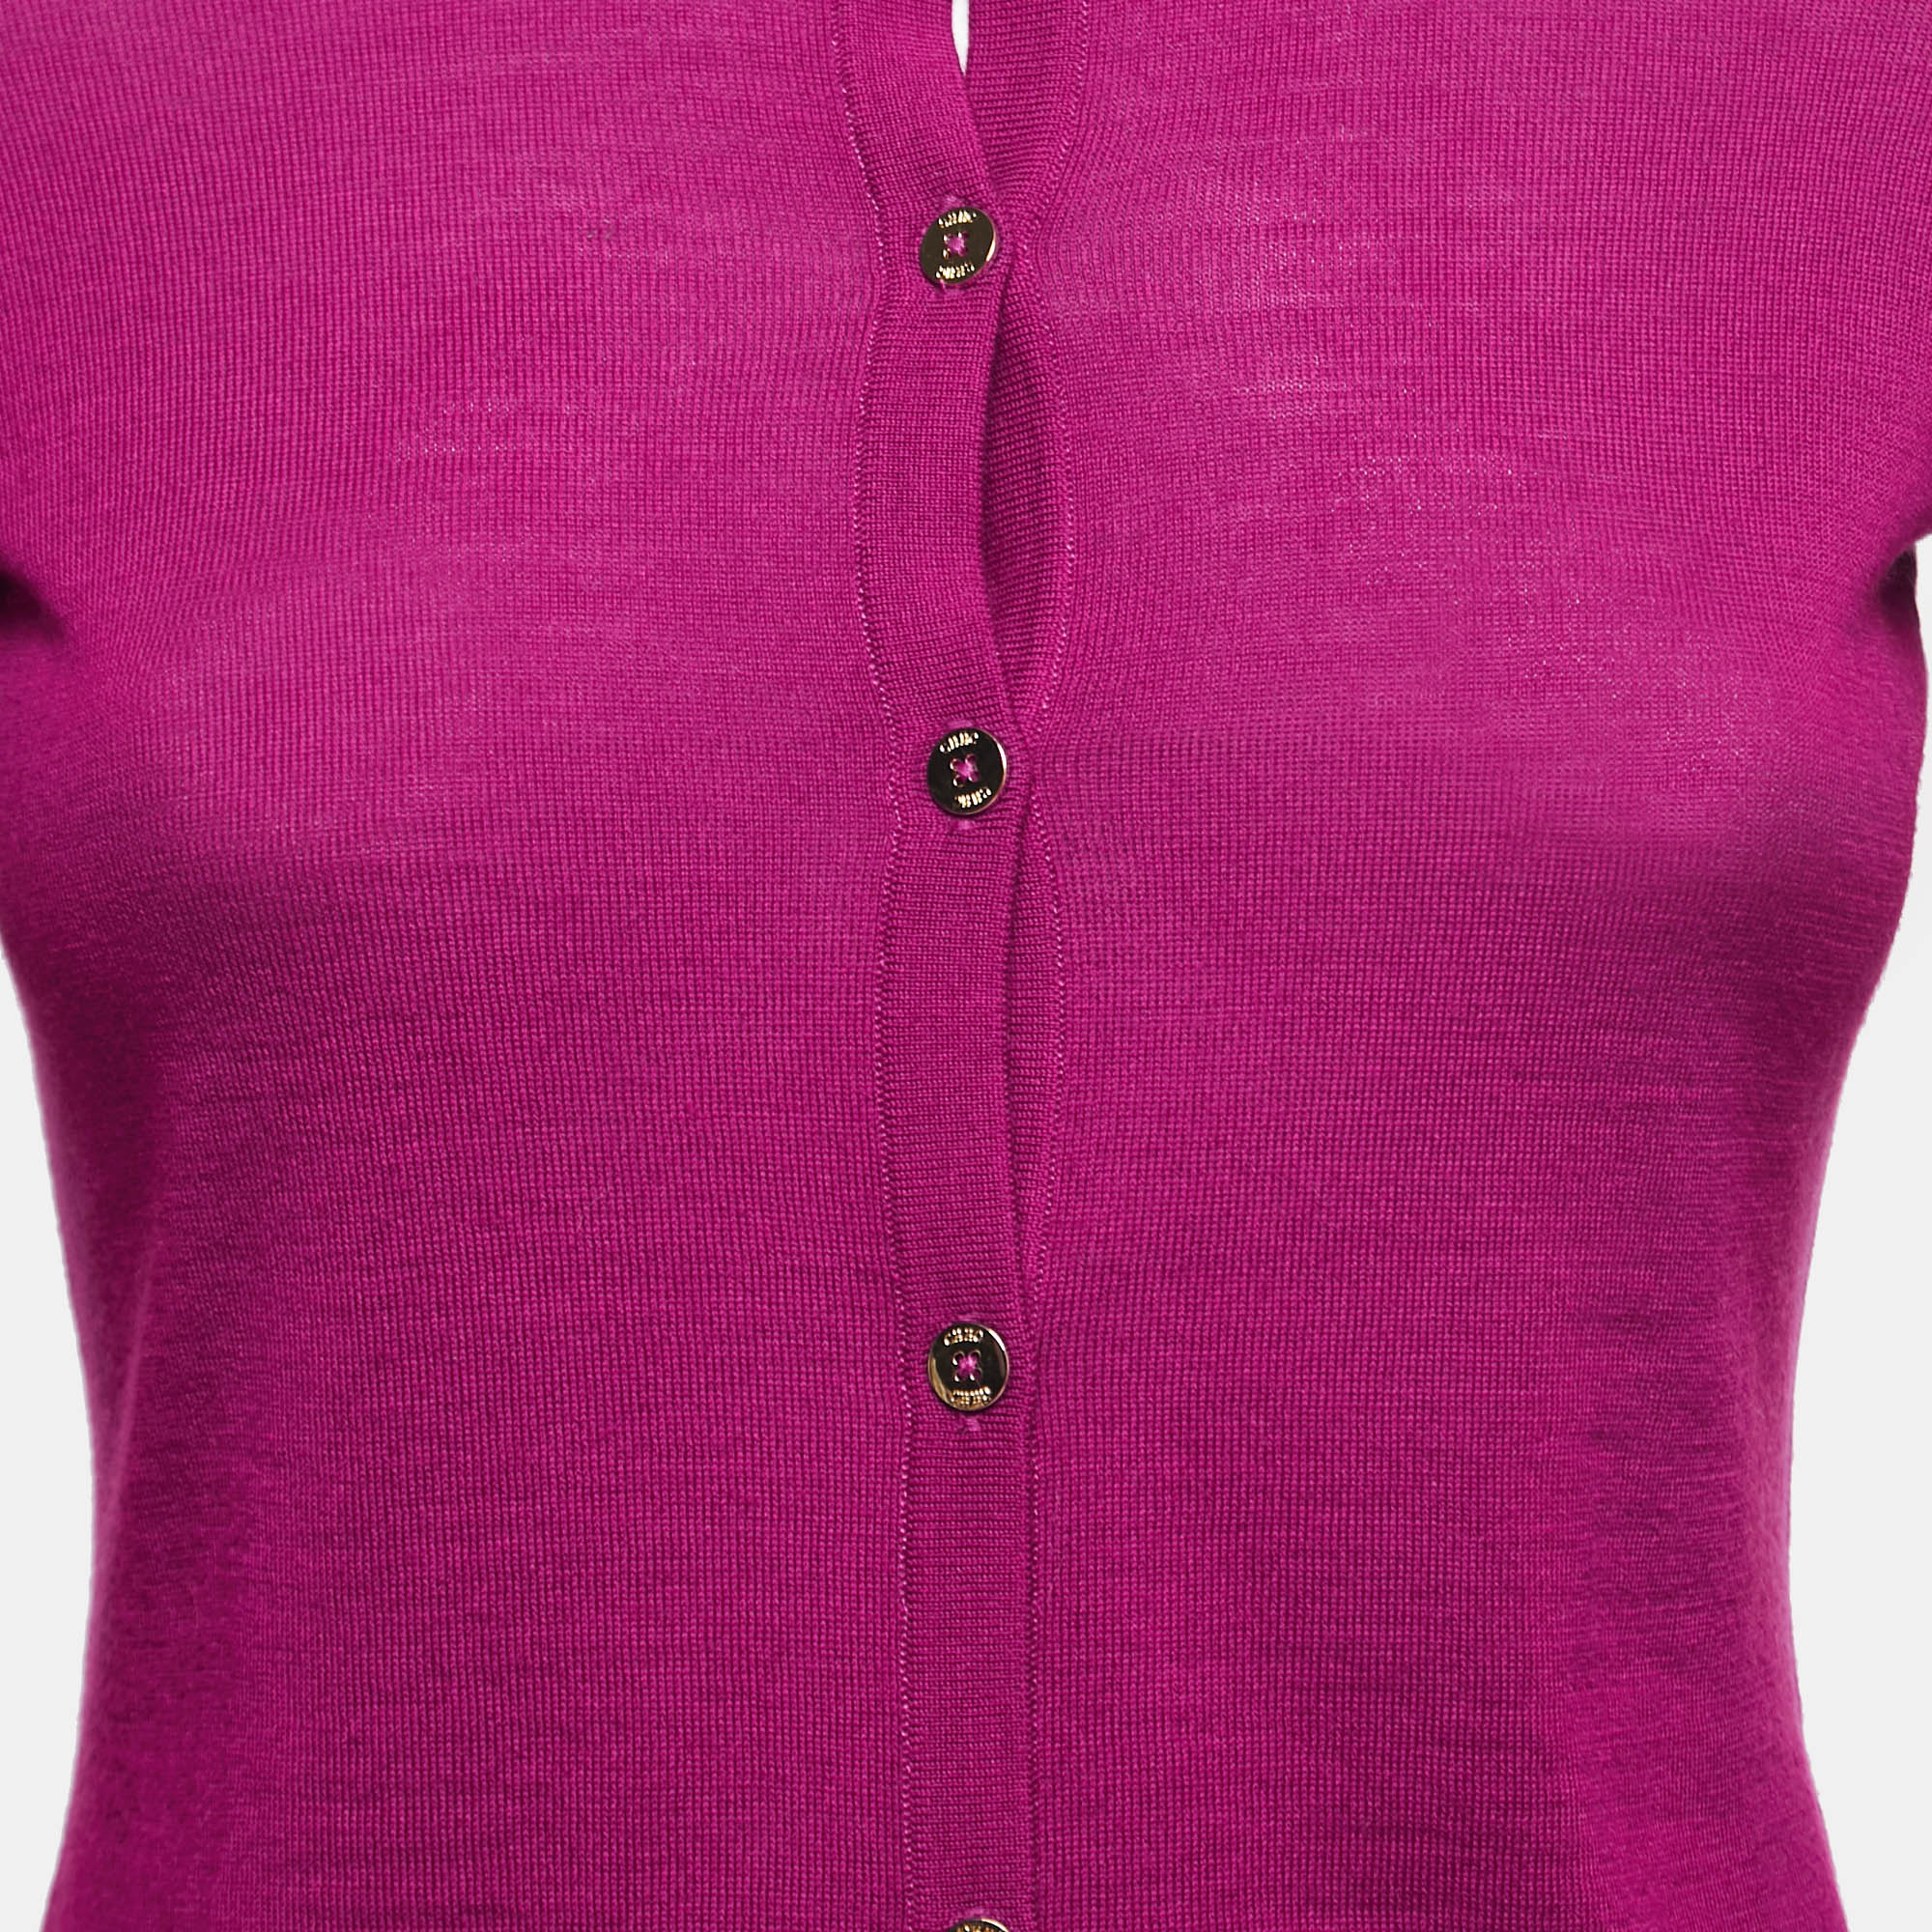 CH Carolina Herrera Purple Knit Buttoned Cardigan XS